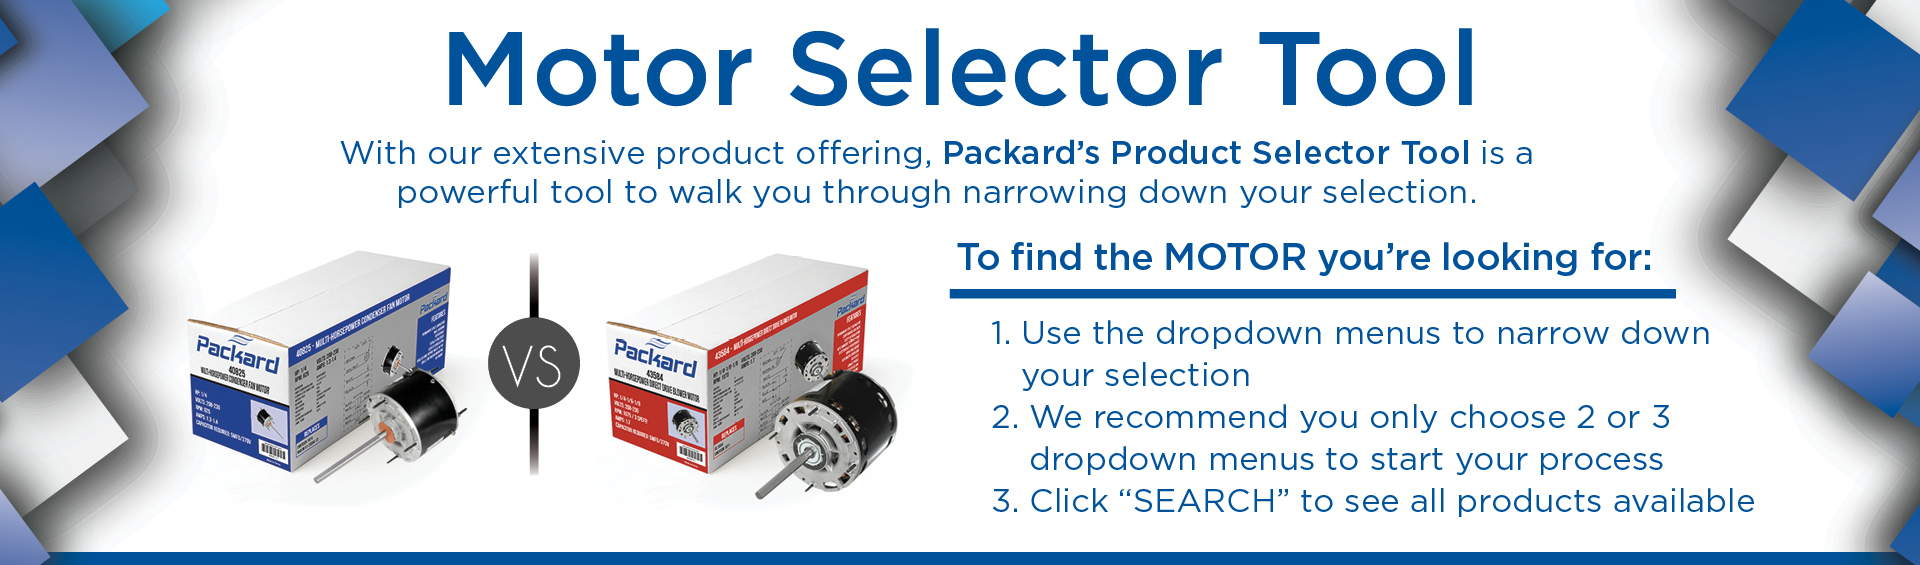 Product Selector Tool - Motors